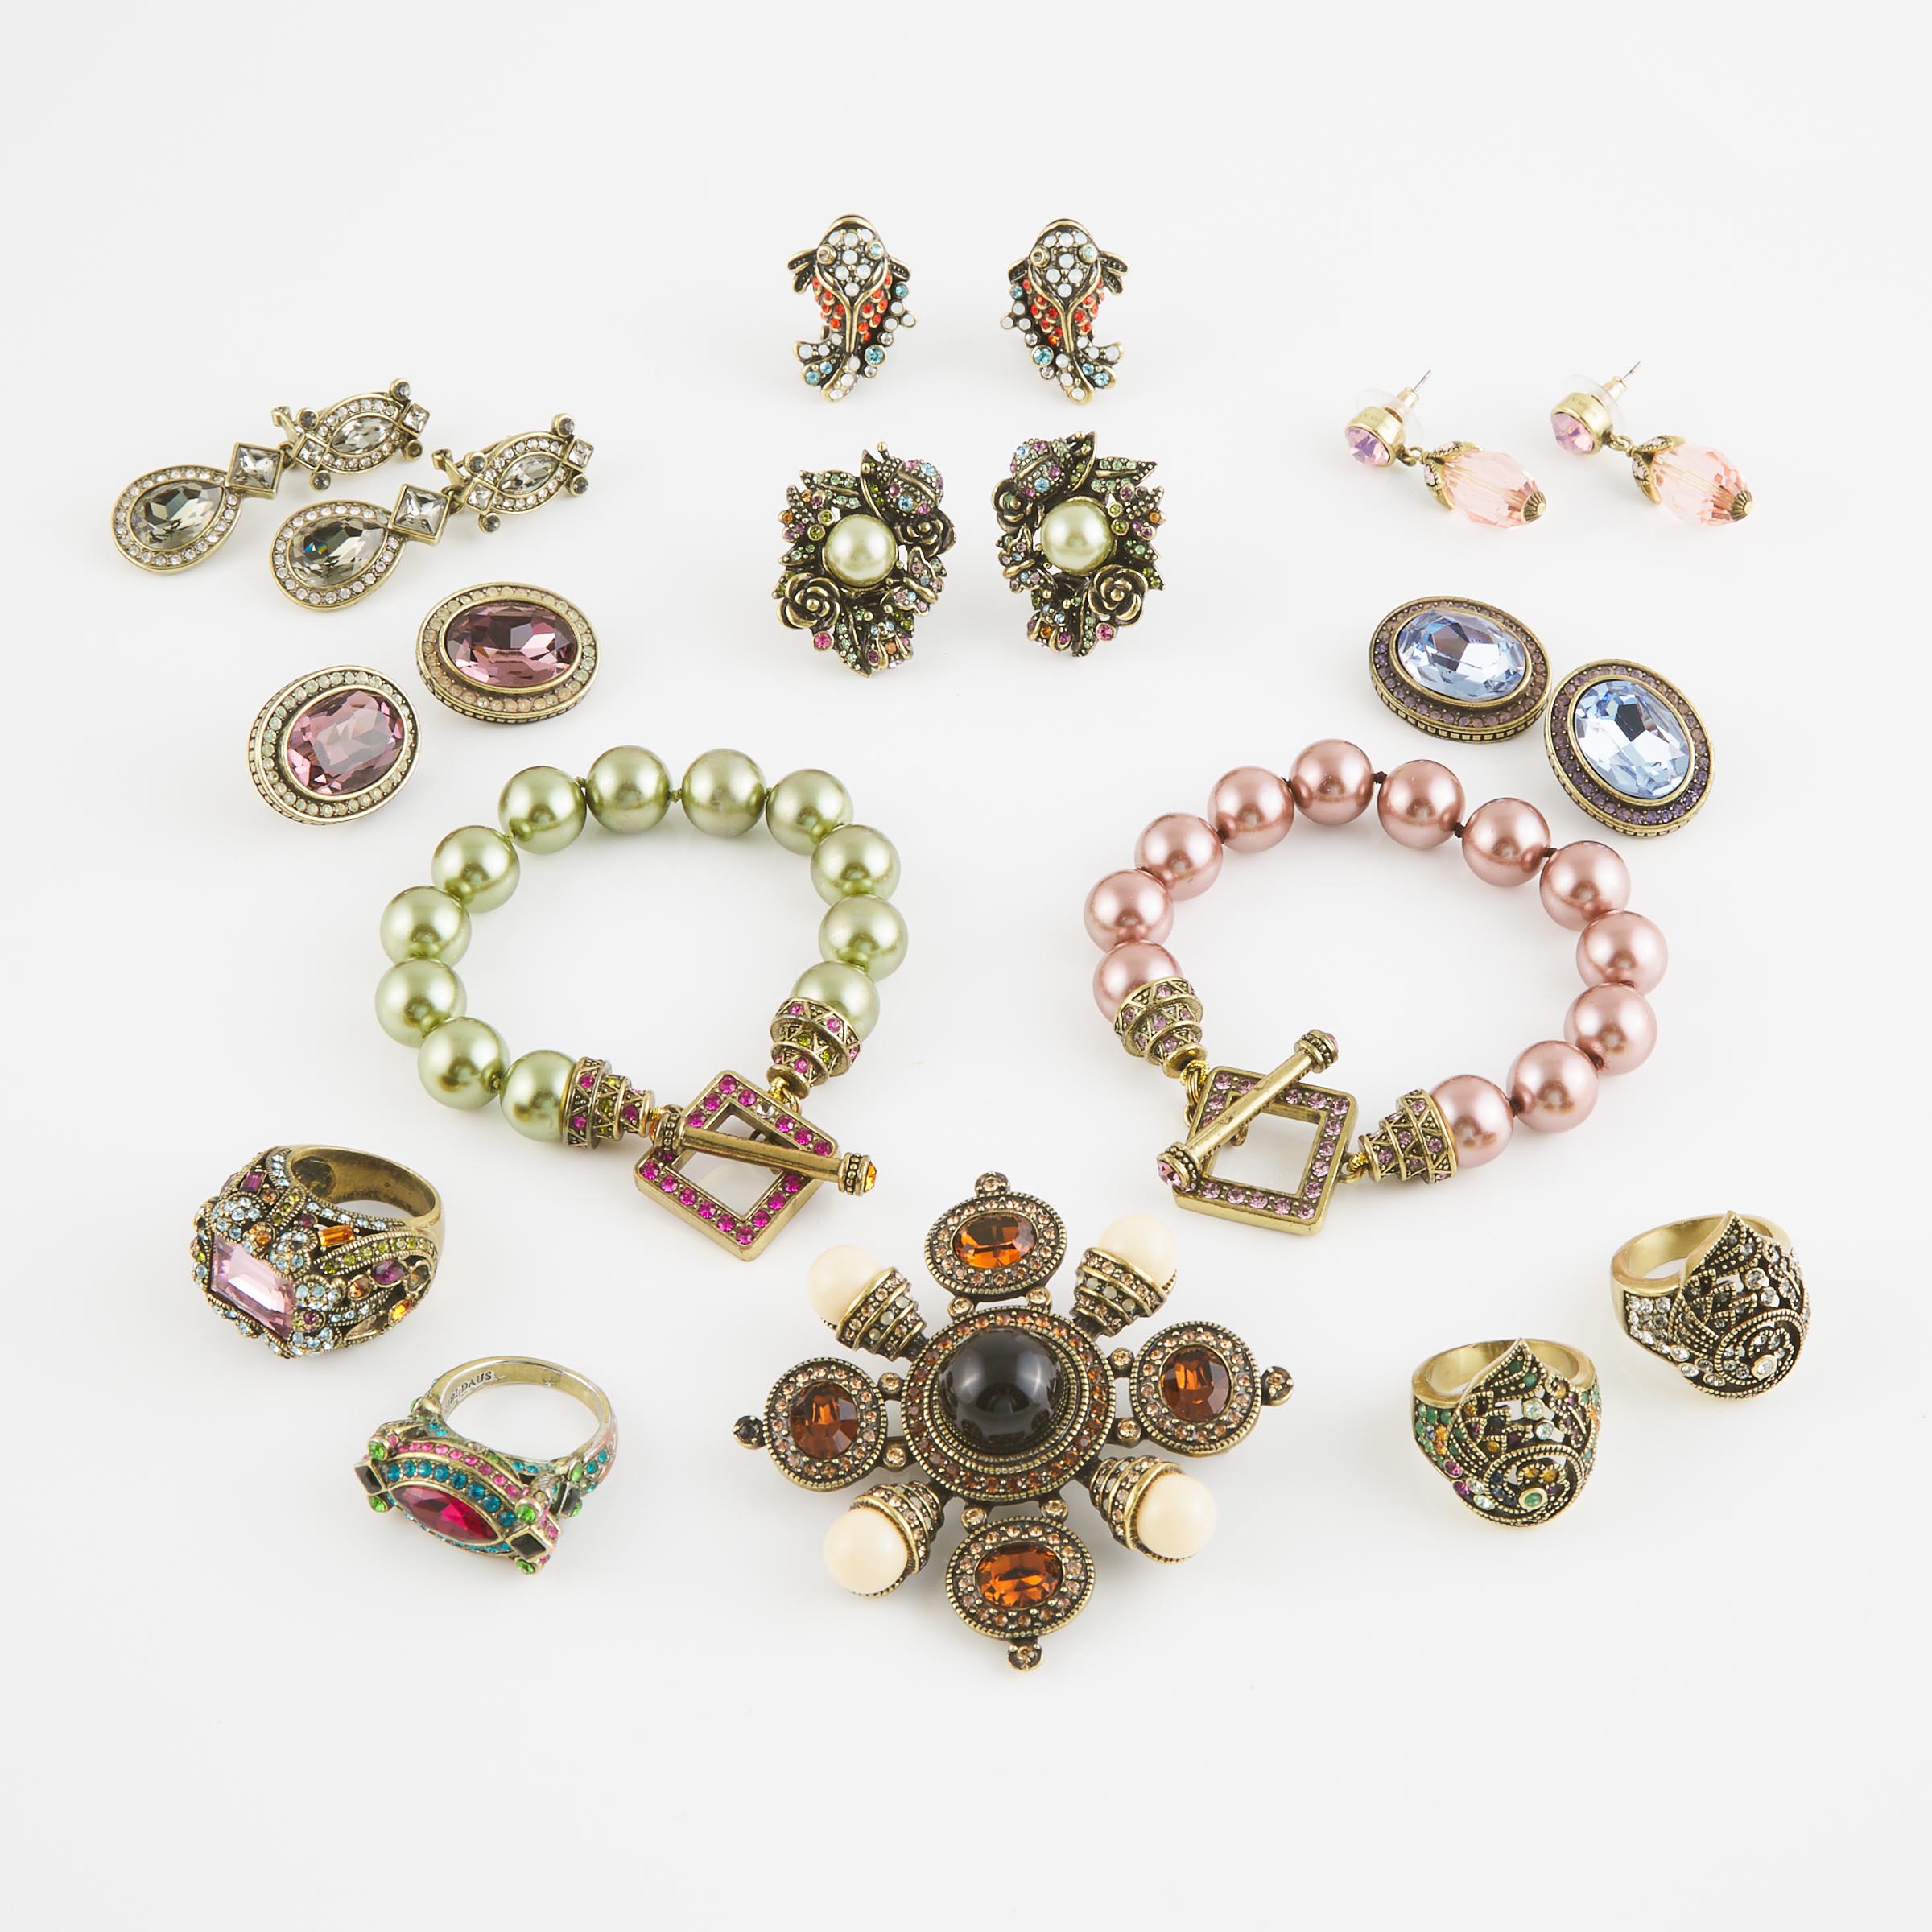 Small Quantity Of Heidi Daus Rhinestone Jewellery